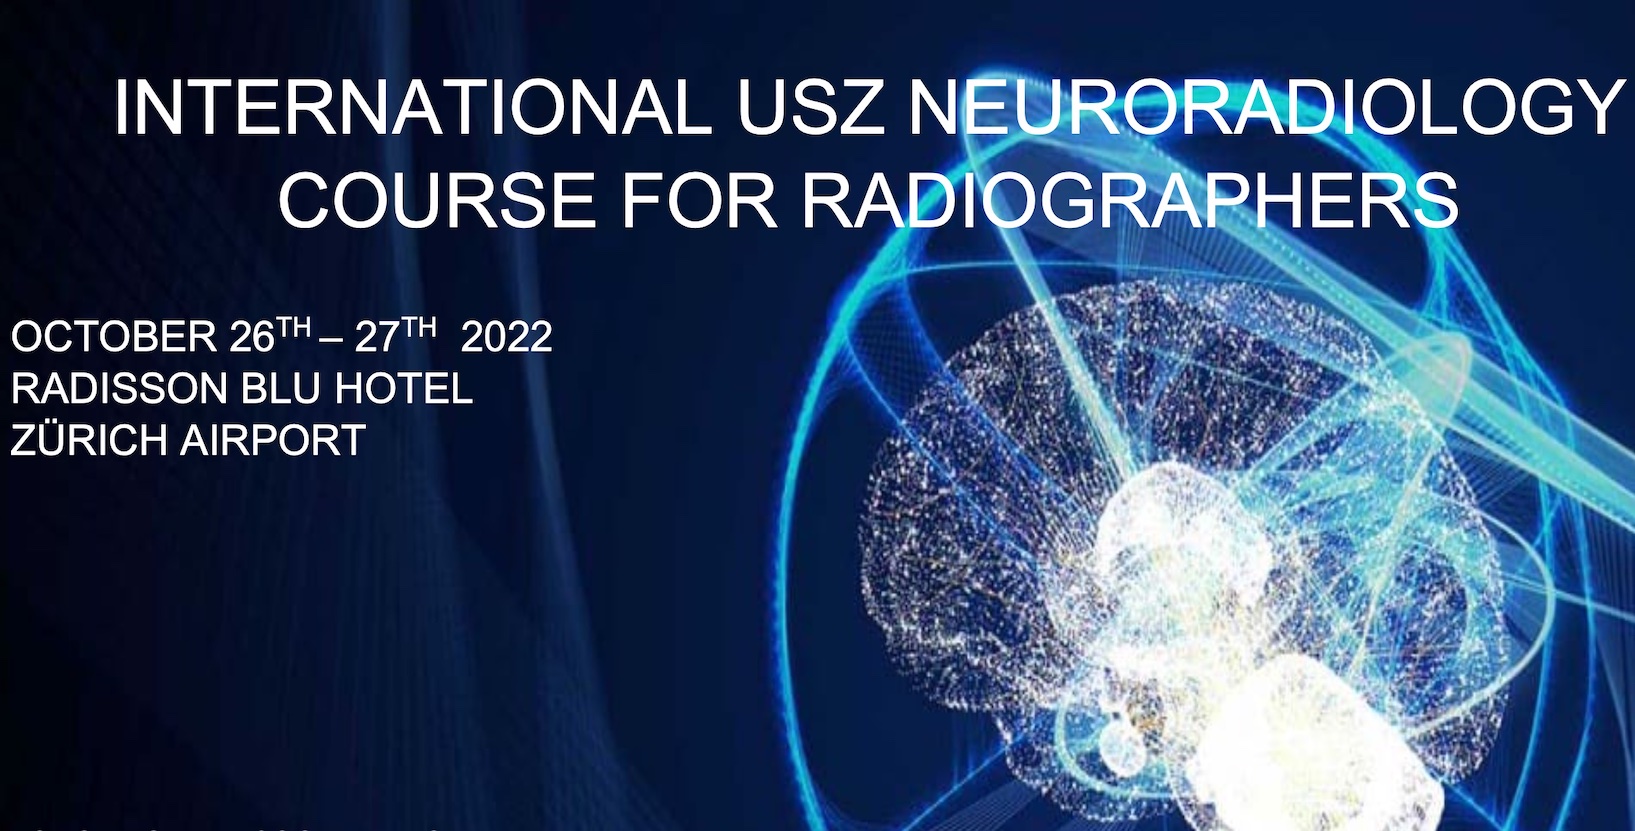 Radiographer Course at USZ Zurich.